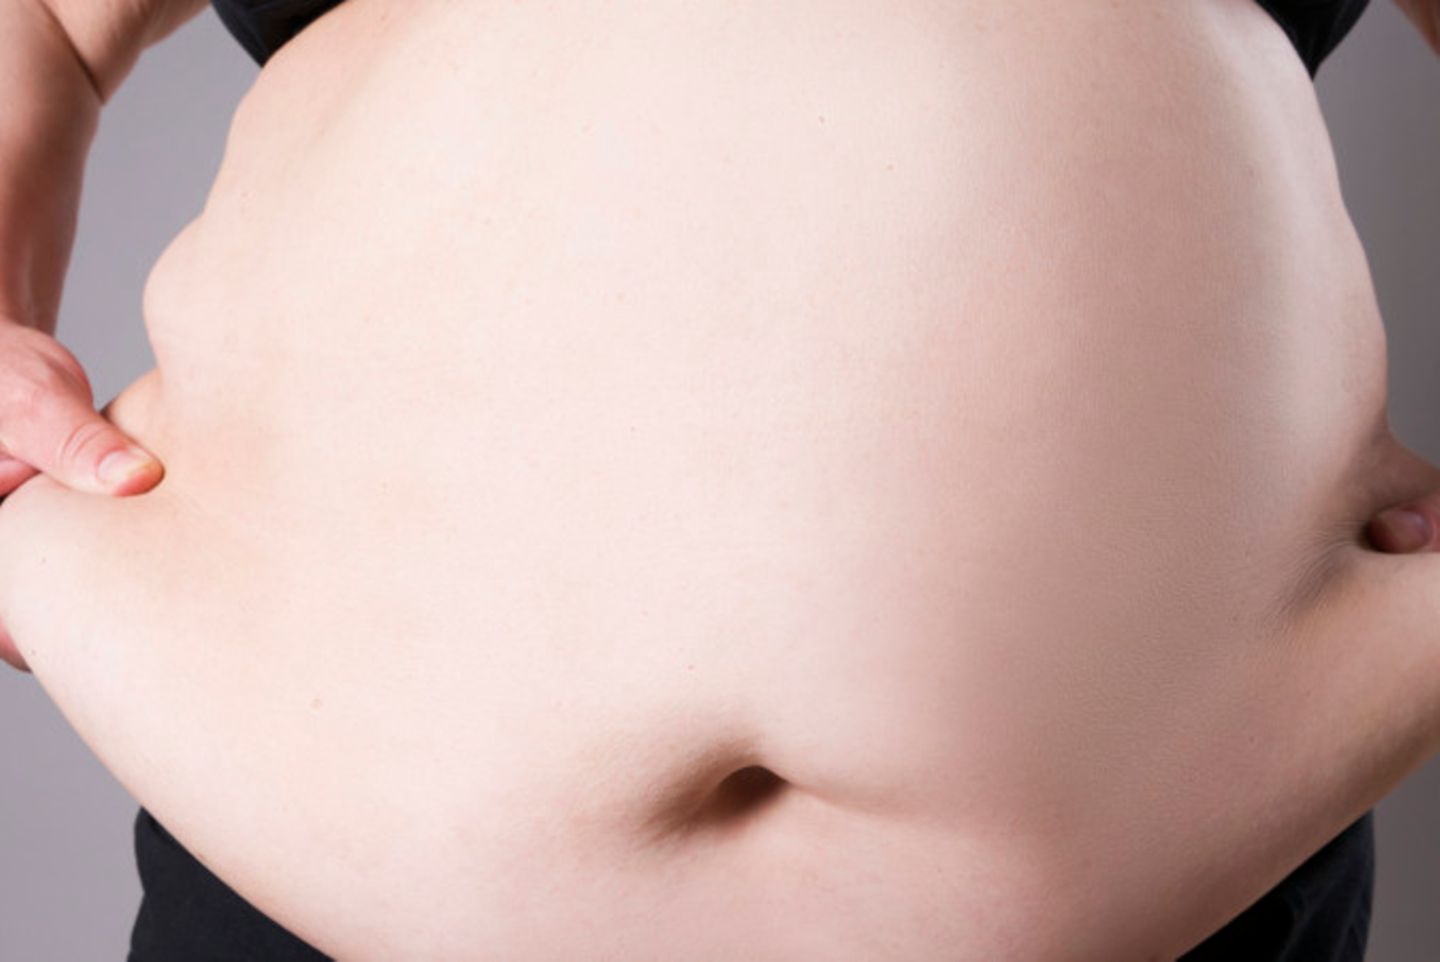 Mädchen dicke fette nebottusi: Dicke